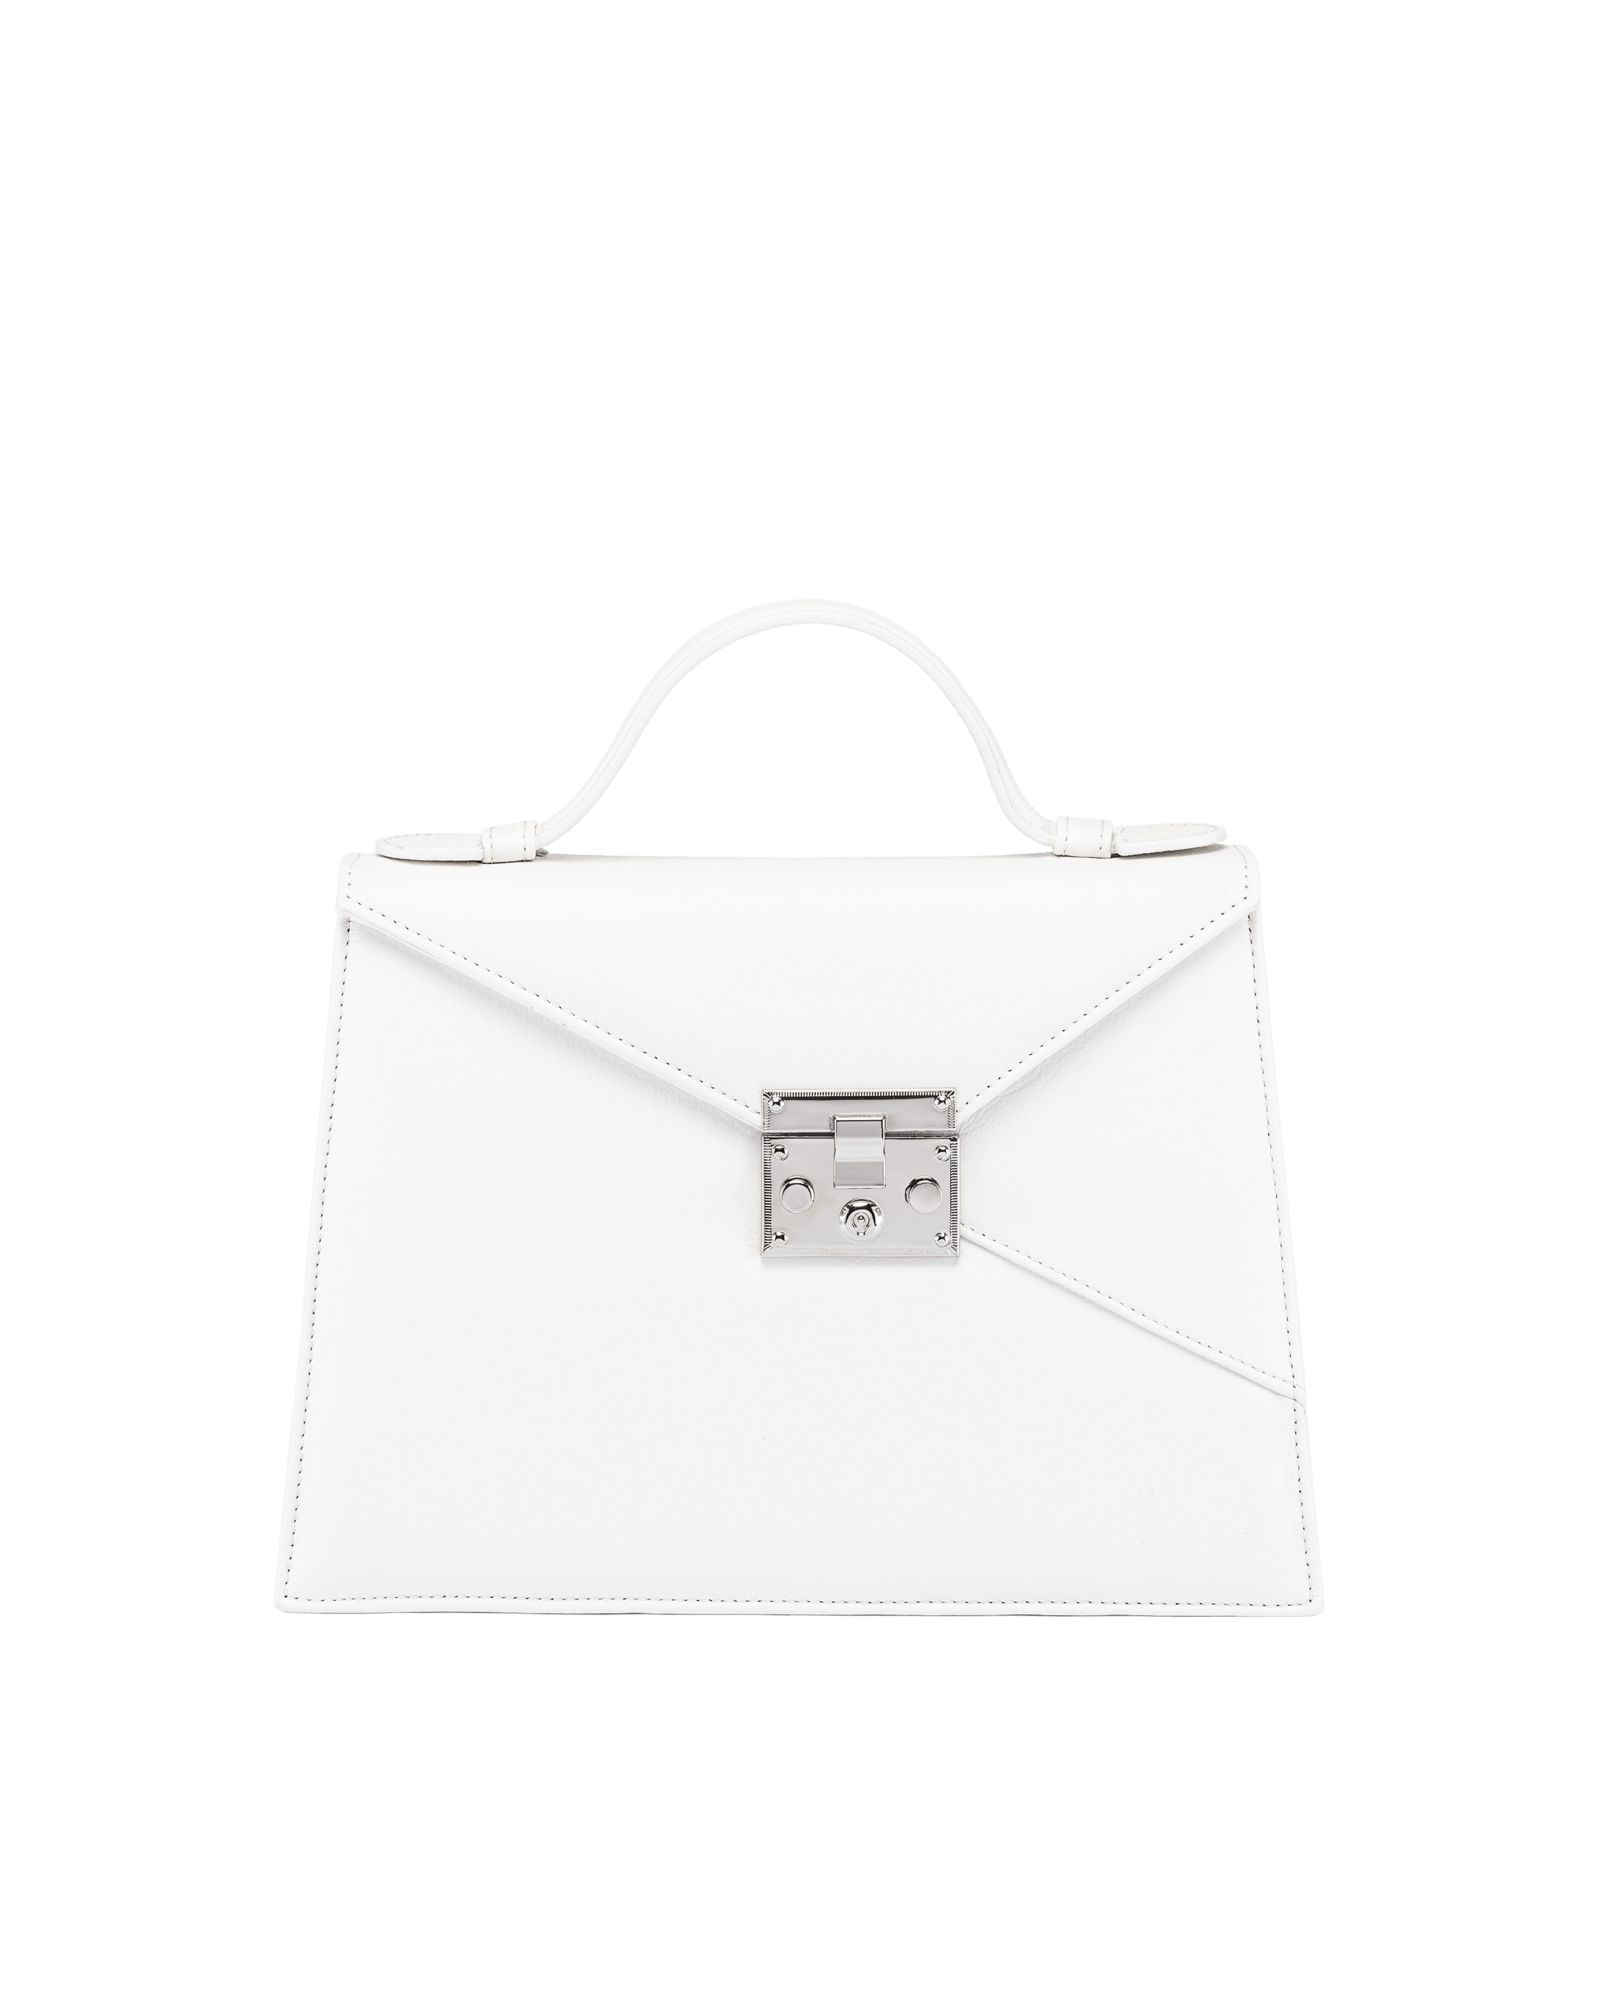 LOURDES 1974 White handbag front view